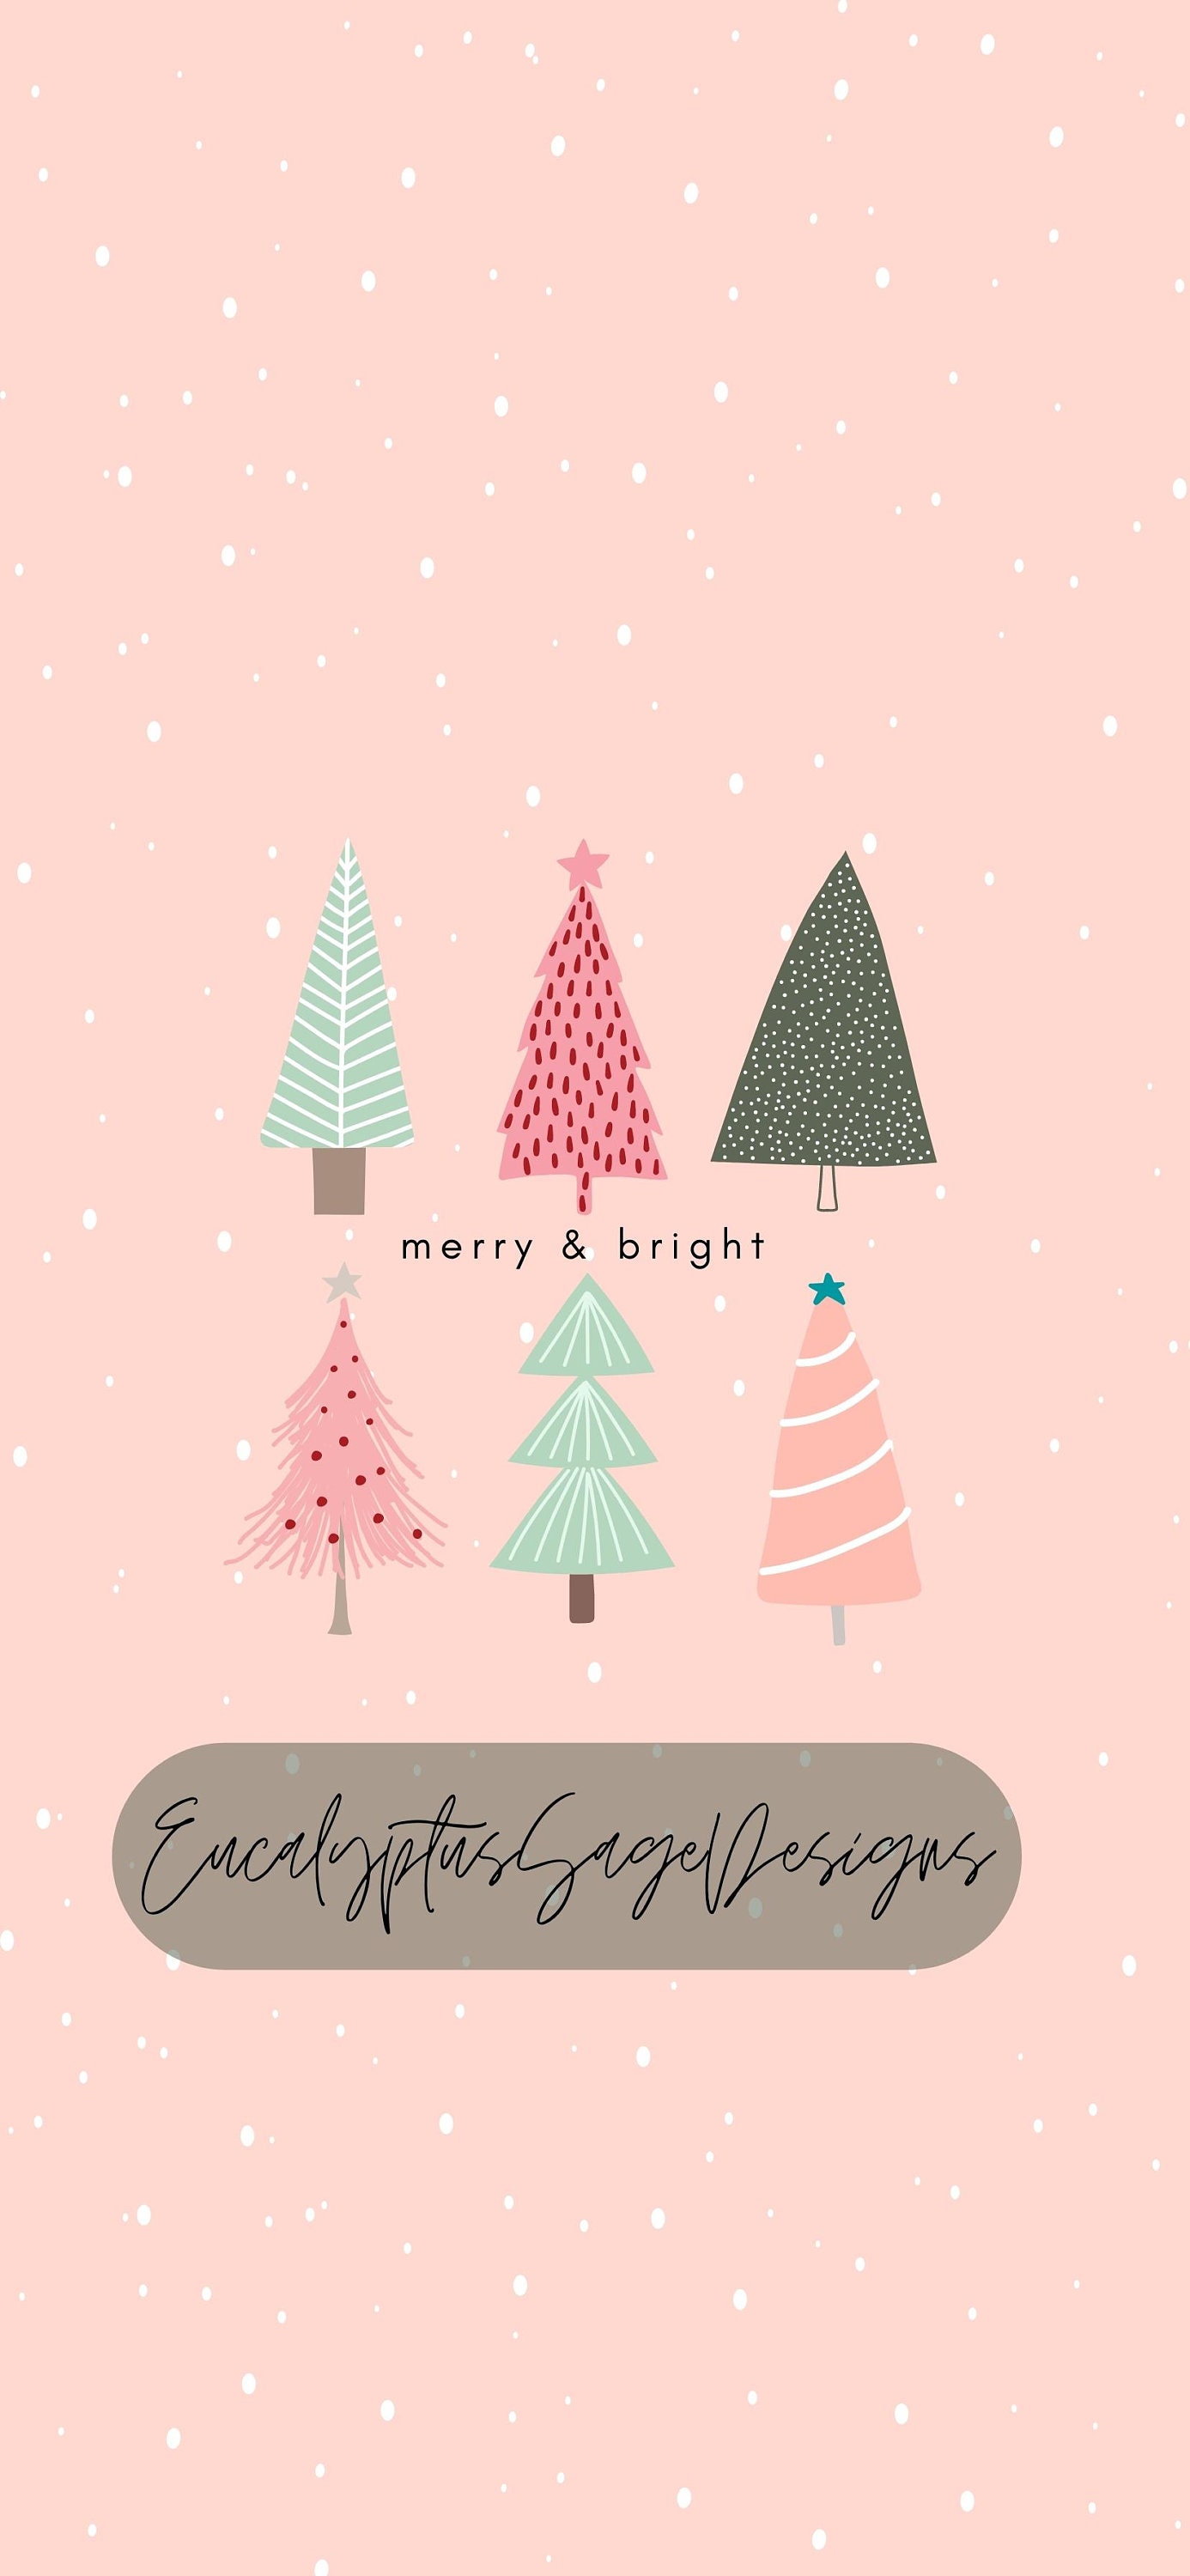 Download Christmas Background Christmas Wallpaper Greeting Card  RoyaltyFree Stock Illustration Image  Pixabay